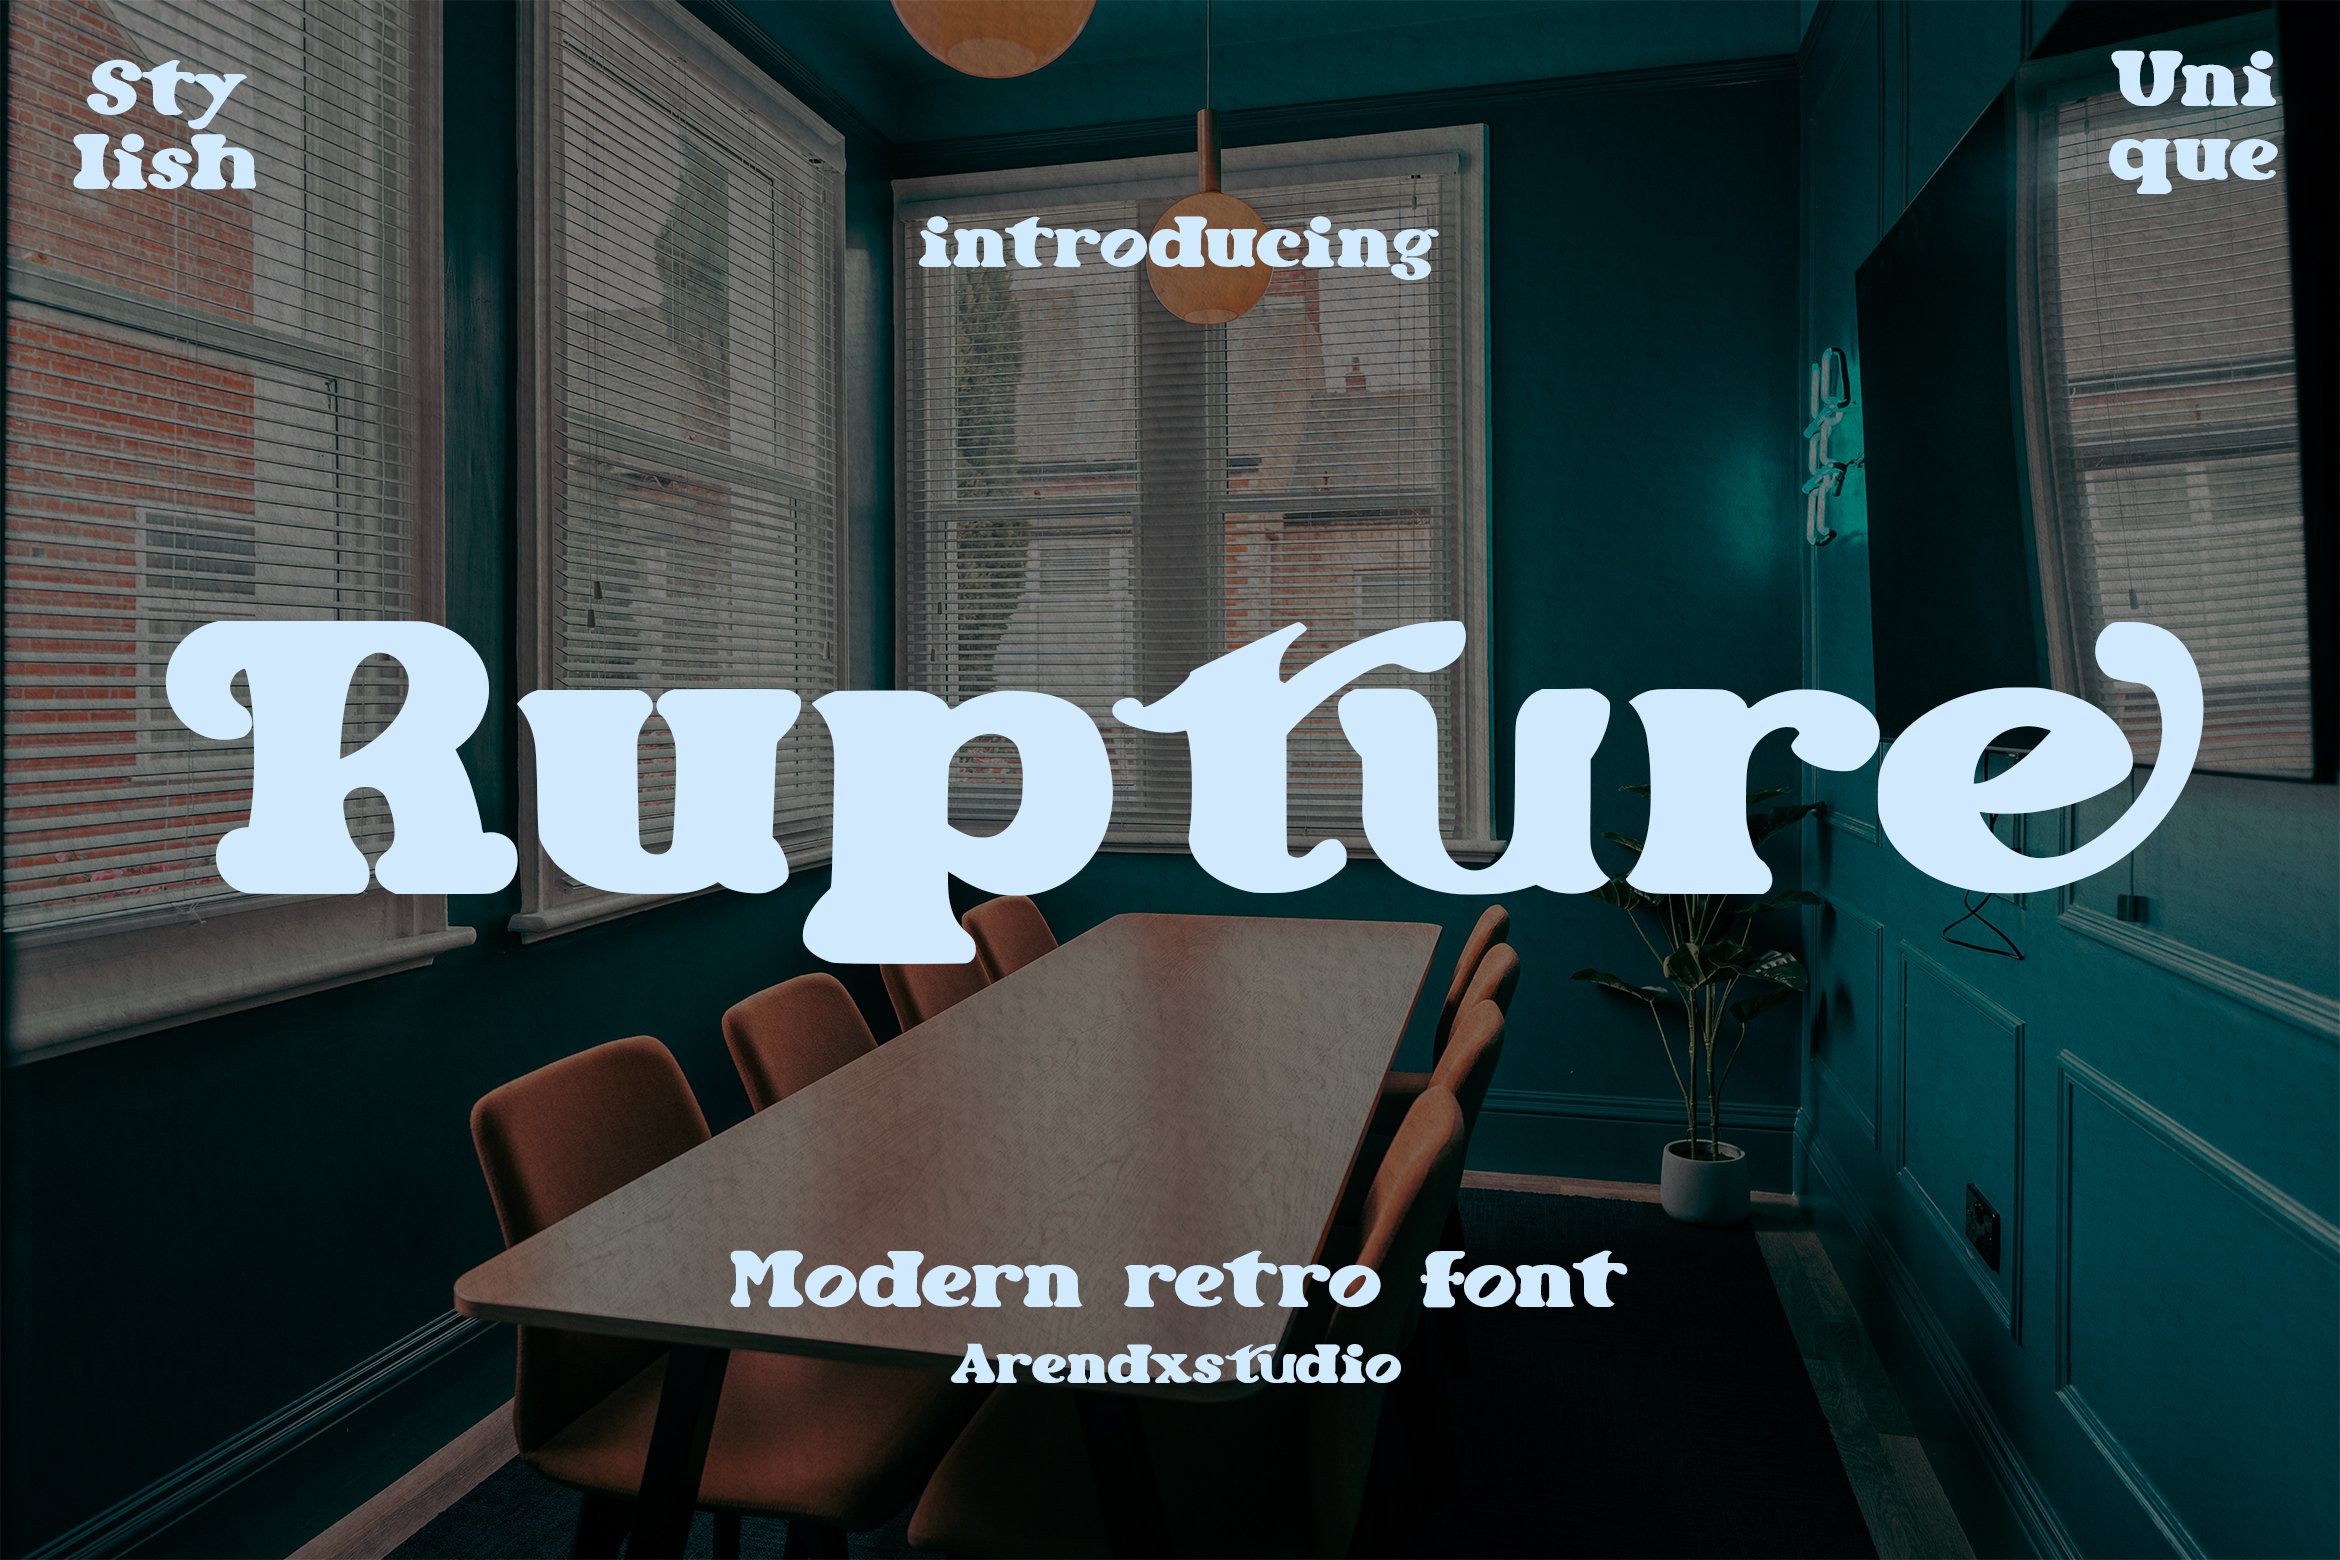 Rupture - Modern Retro Font cover image.